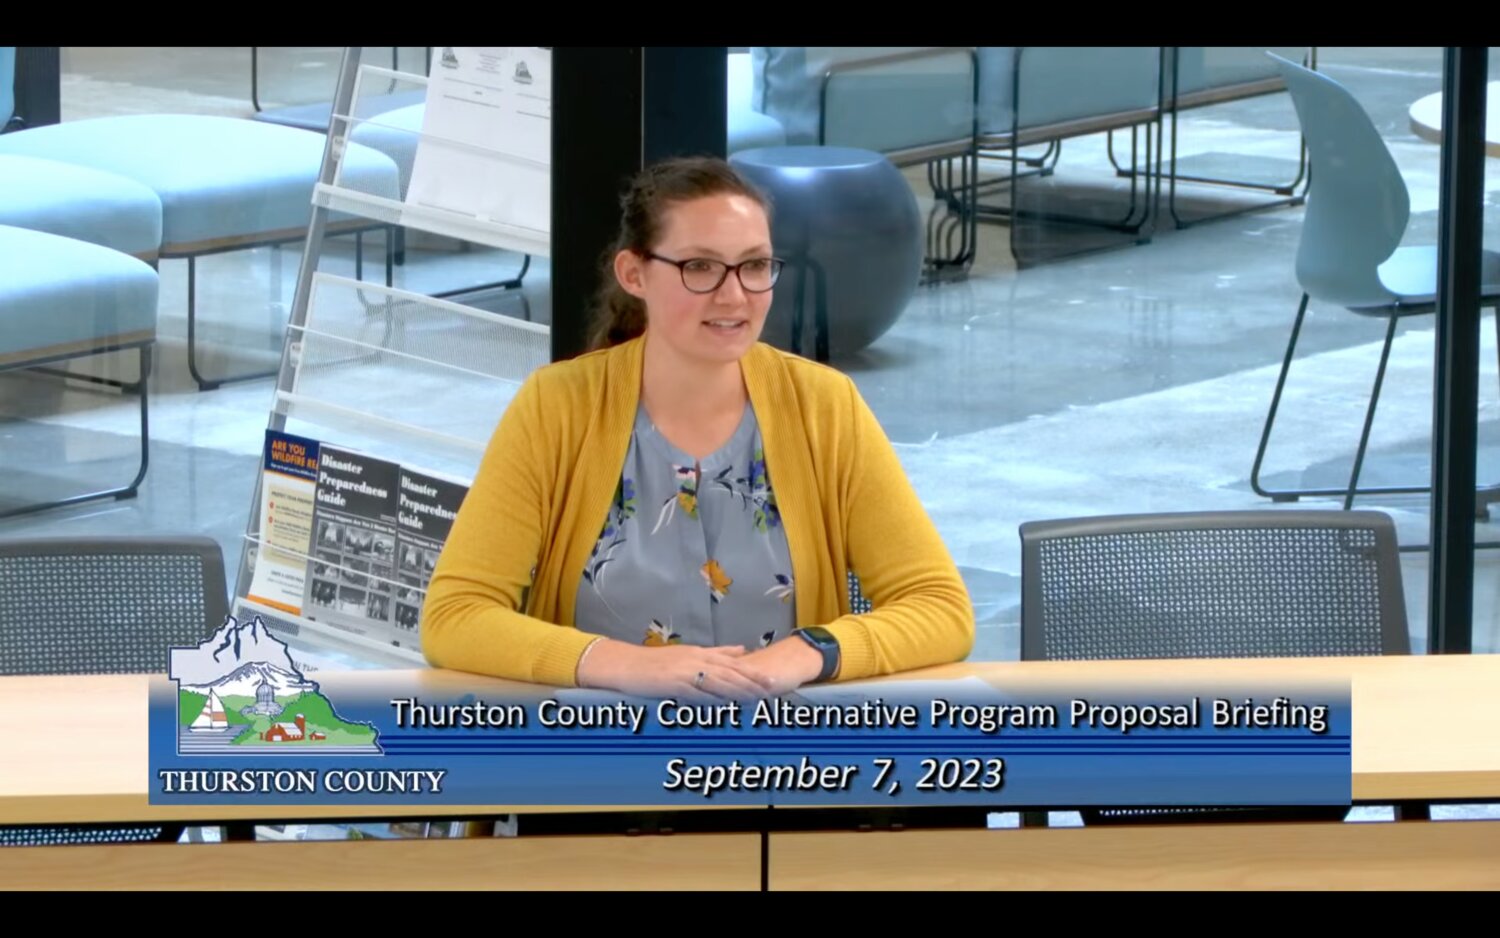 Criminal Justice Regional Program Manager Leah Landon led the Thurston County Court Alternative Program Proposal Briefing.